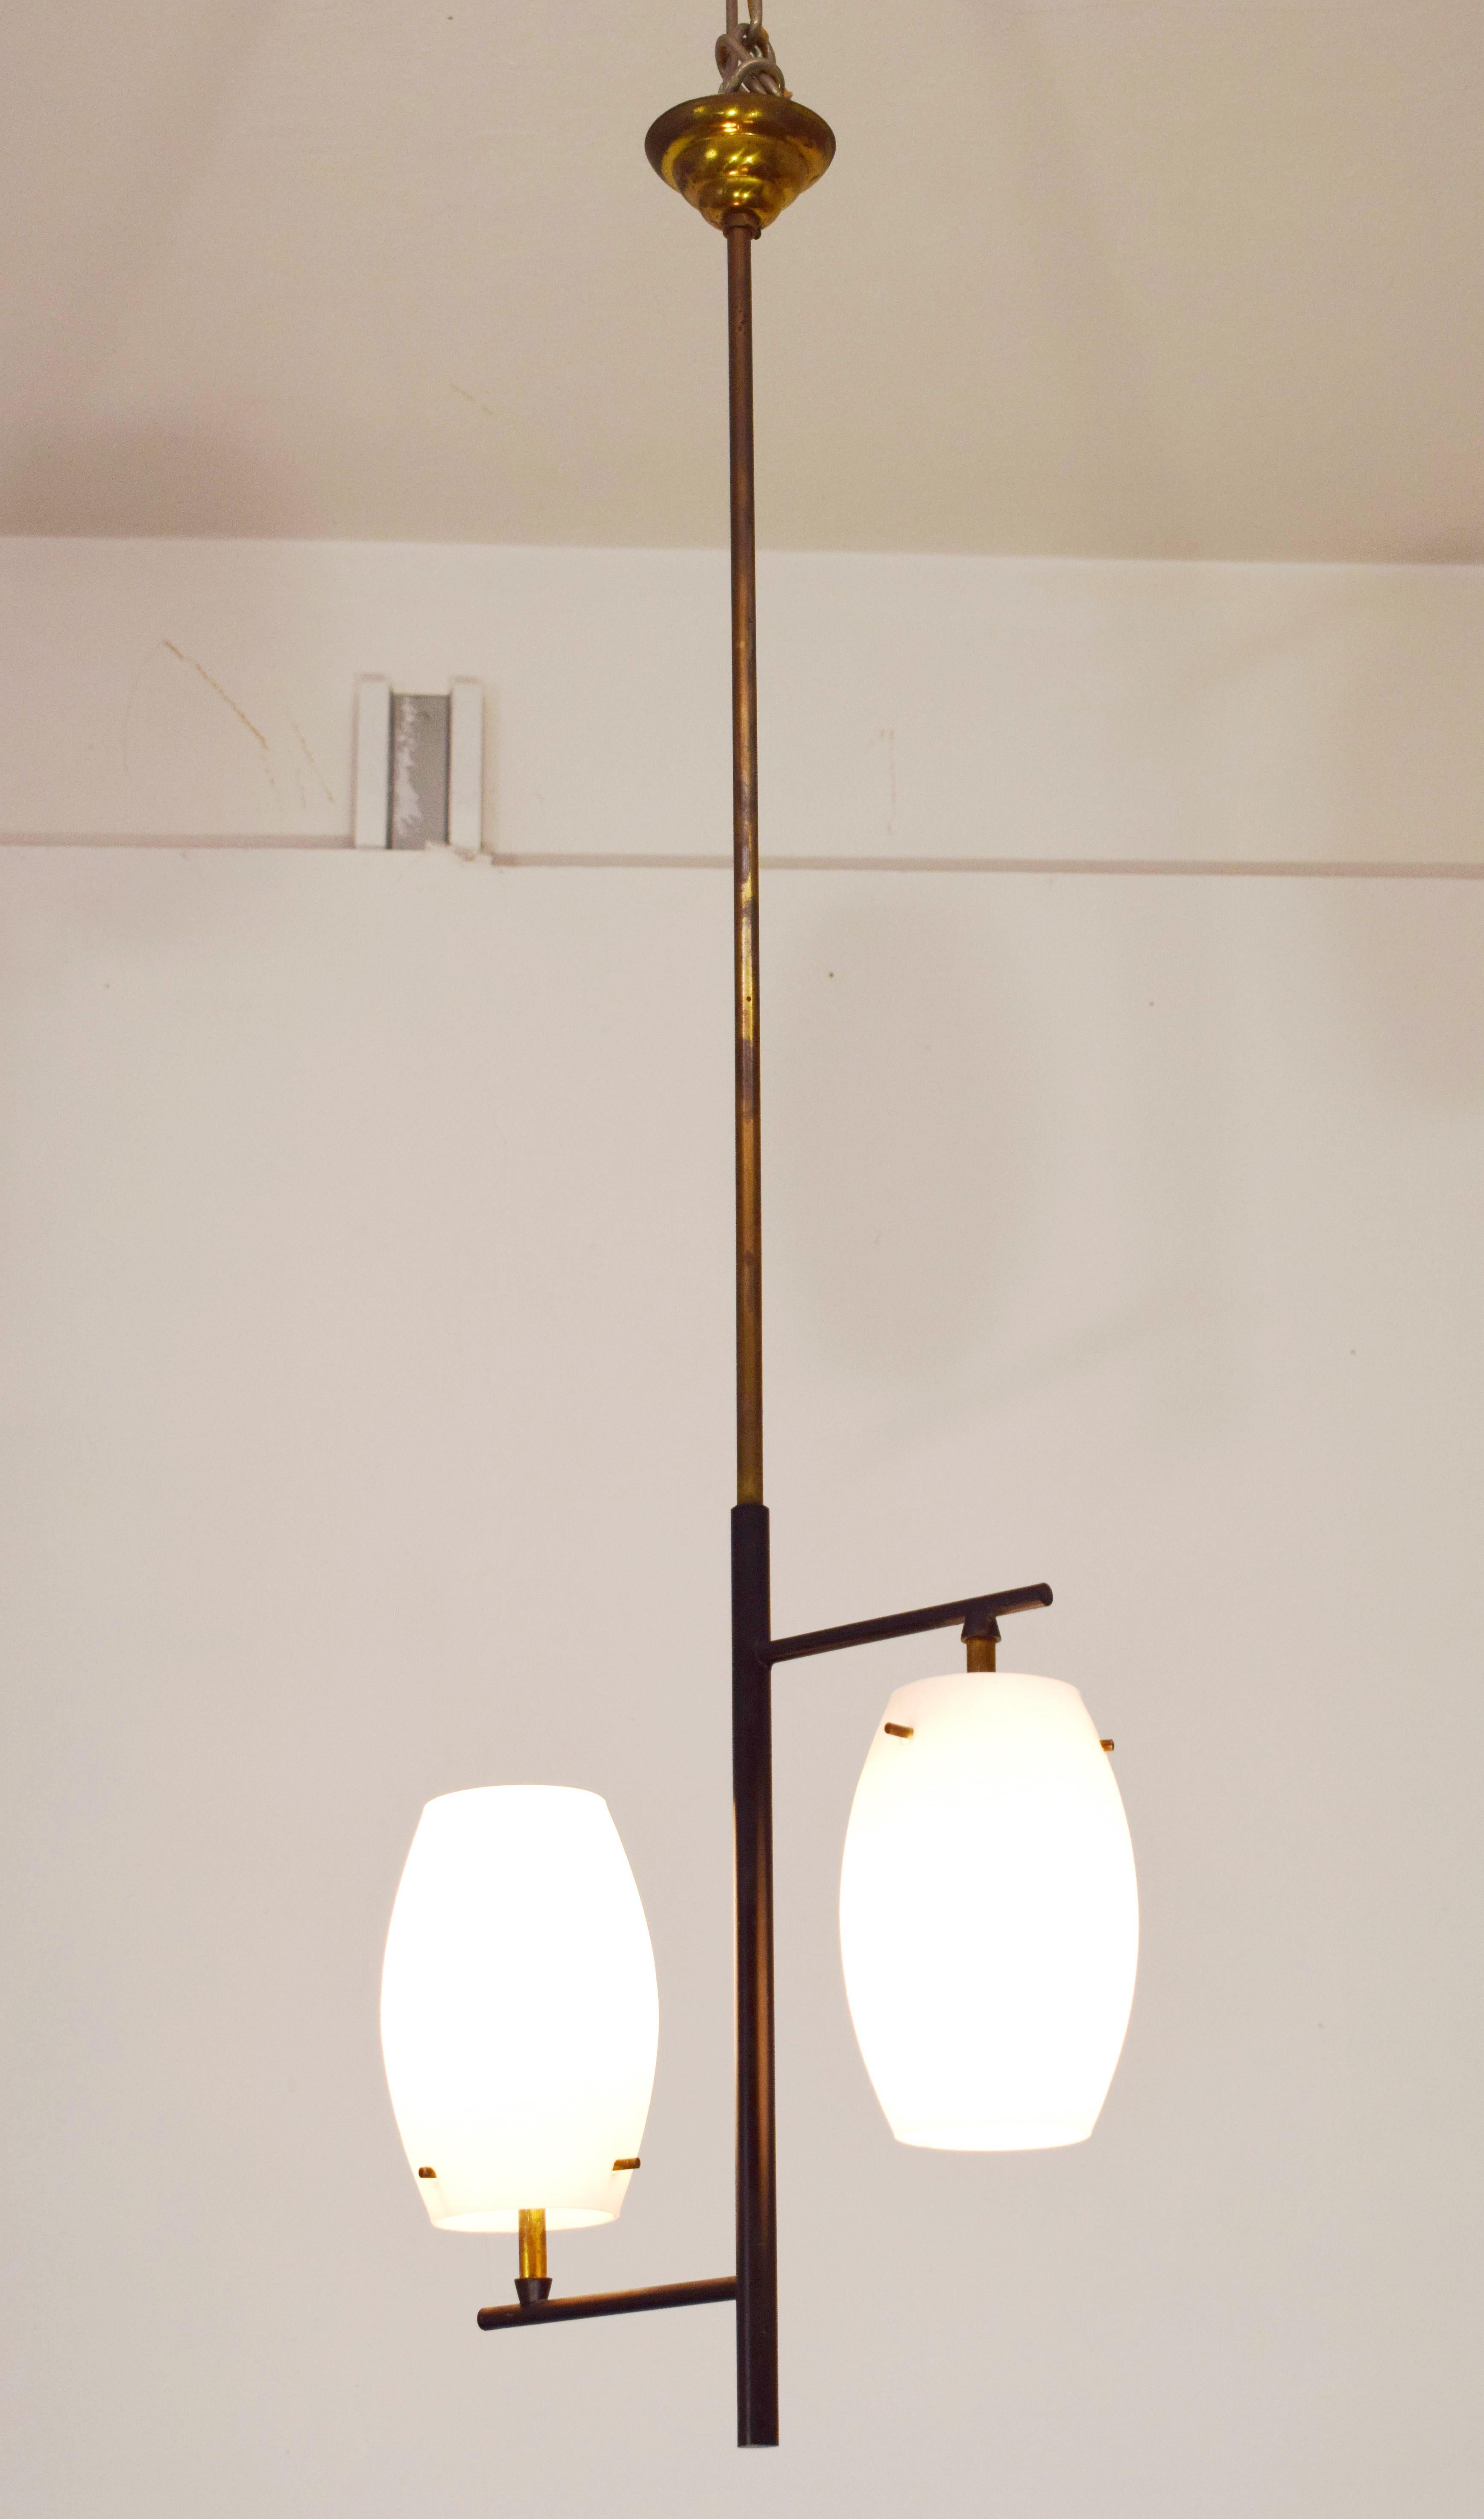 Italian suspension lamp by Stilnovo, 1950s.
Quantity 2.
Dimensions: H= 92 cm; W= 30 cm; D= 10 cm.